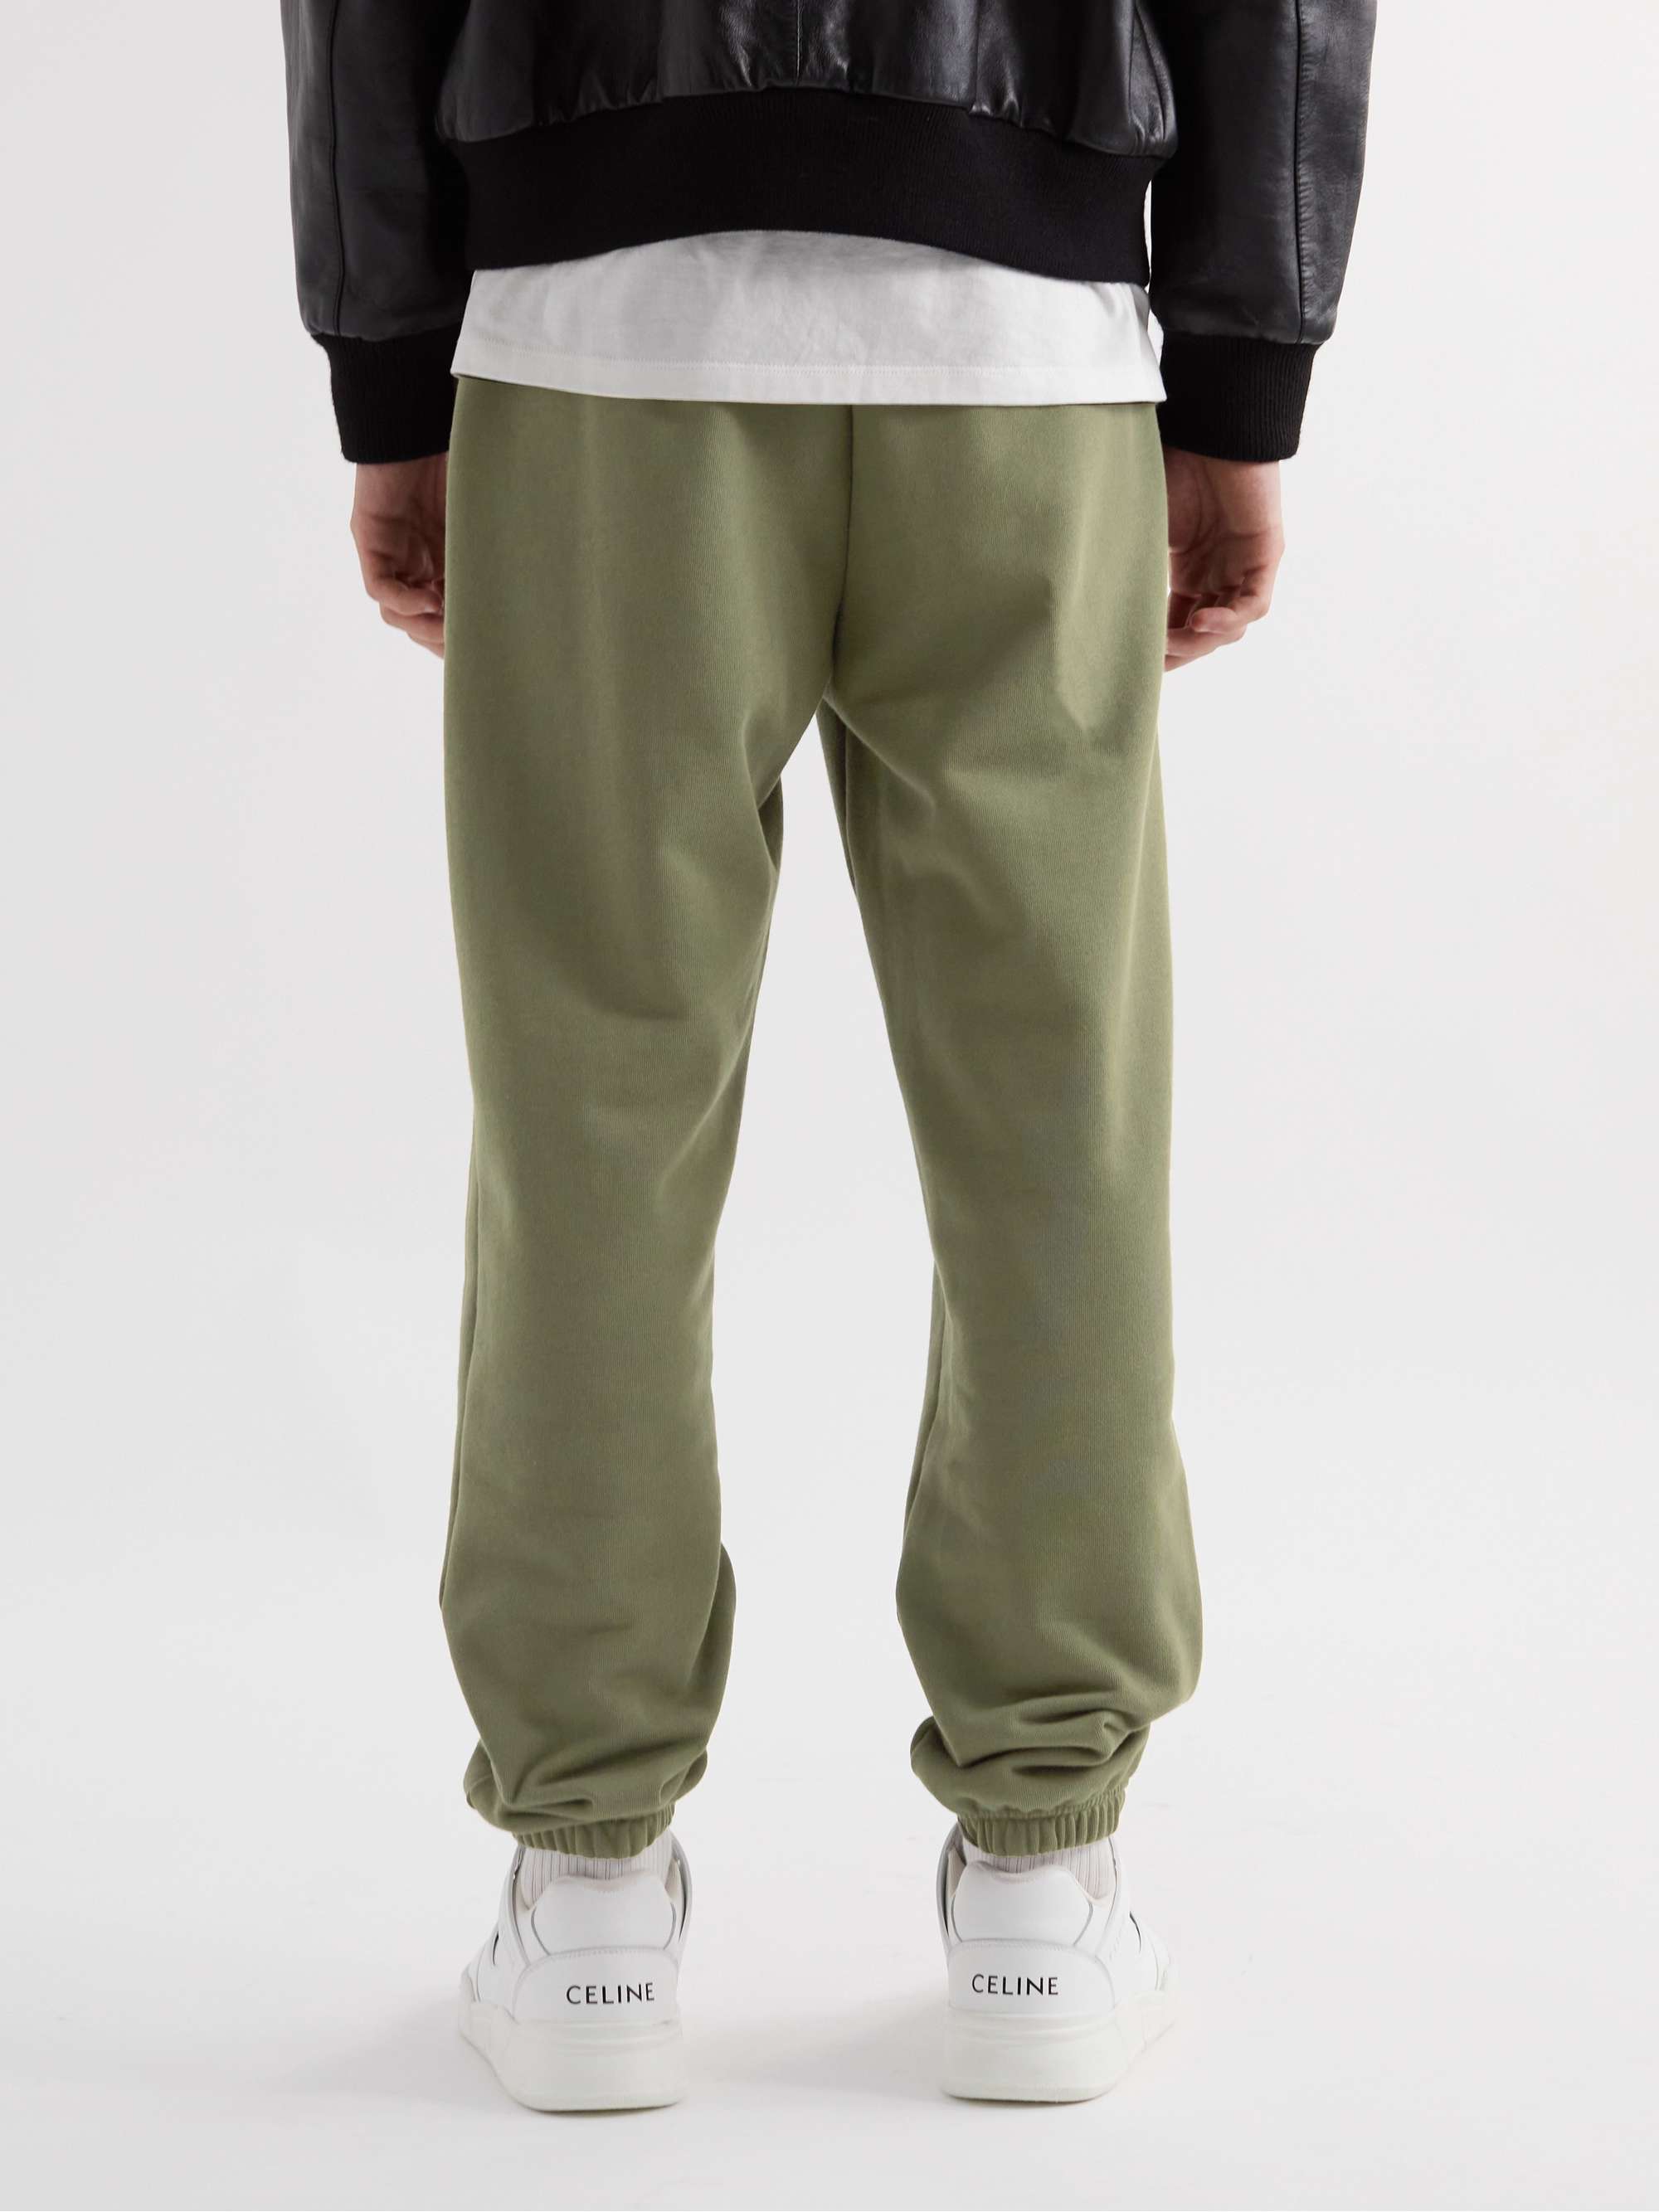 CELINE HOMME Tapered Logo-Print Cotton-Blend Jersey Sweatpants